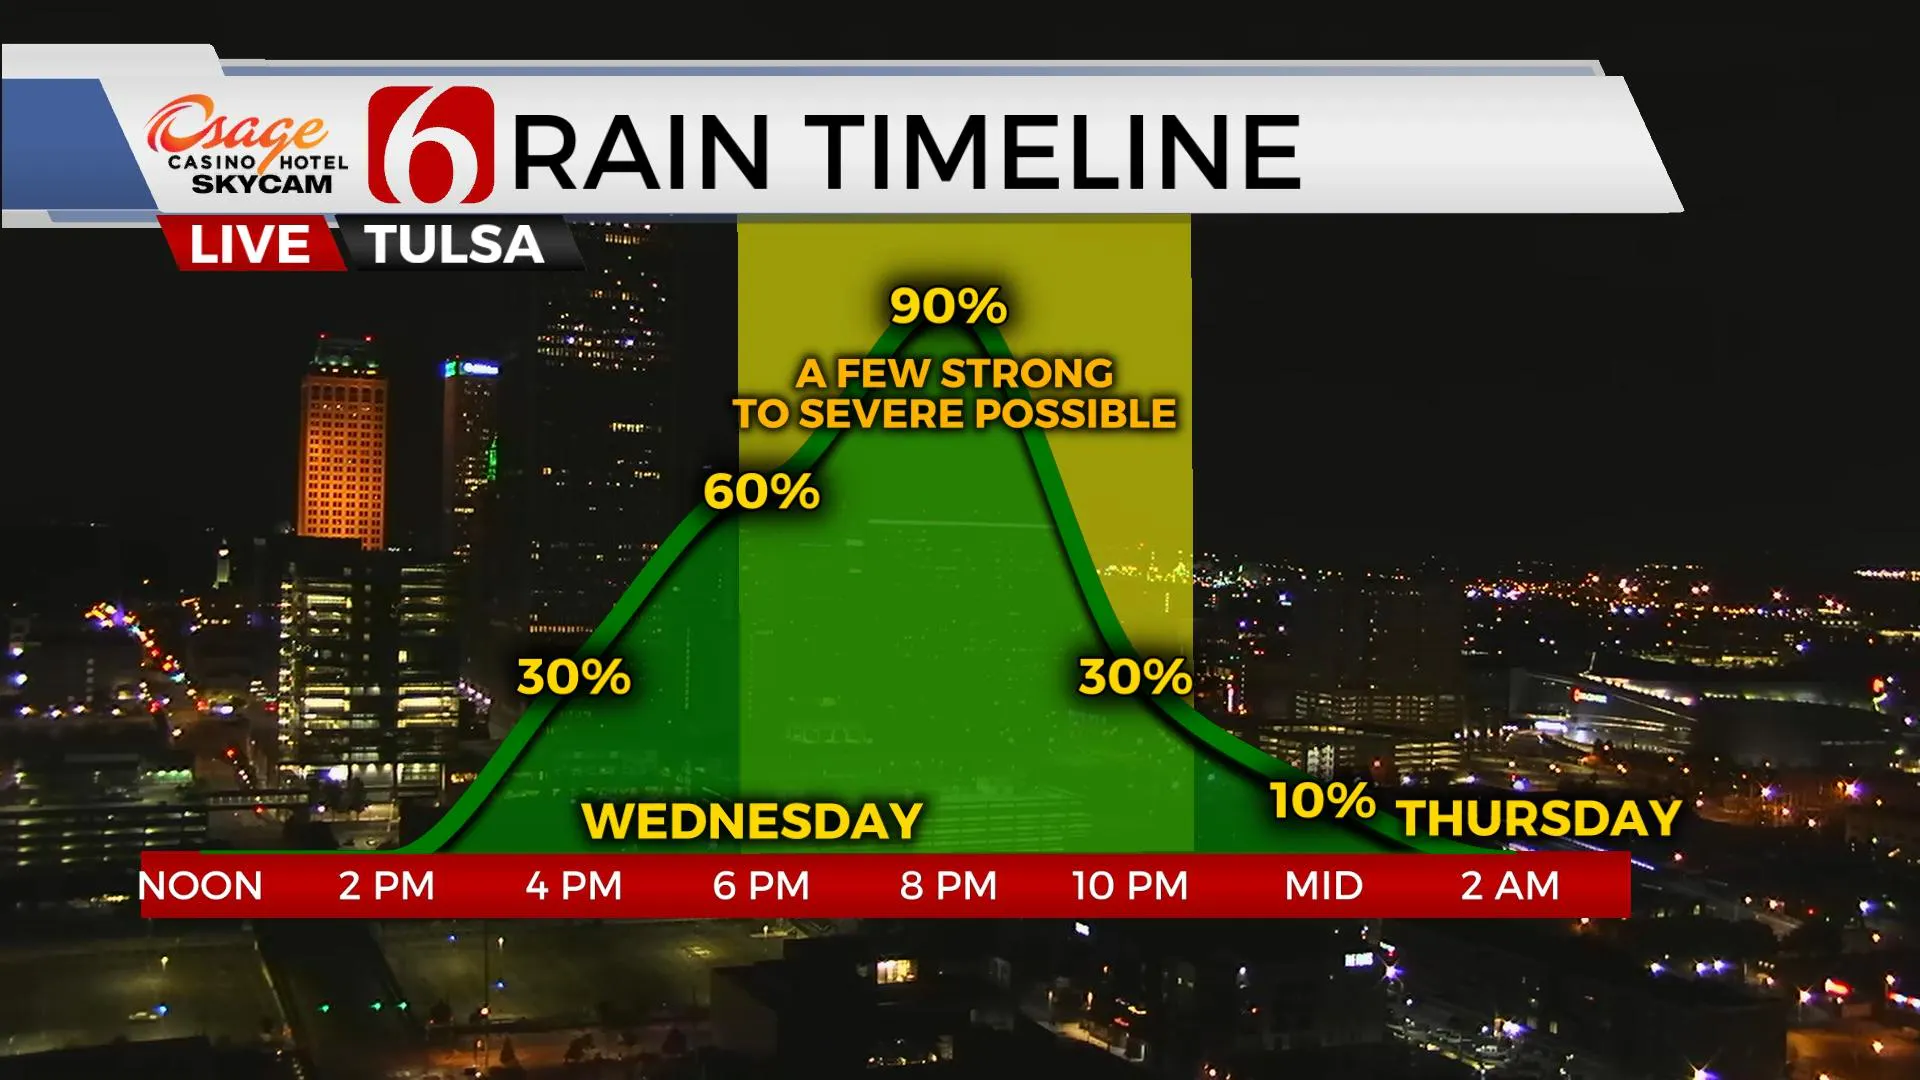 Wednesday Rain Timeline 